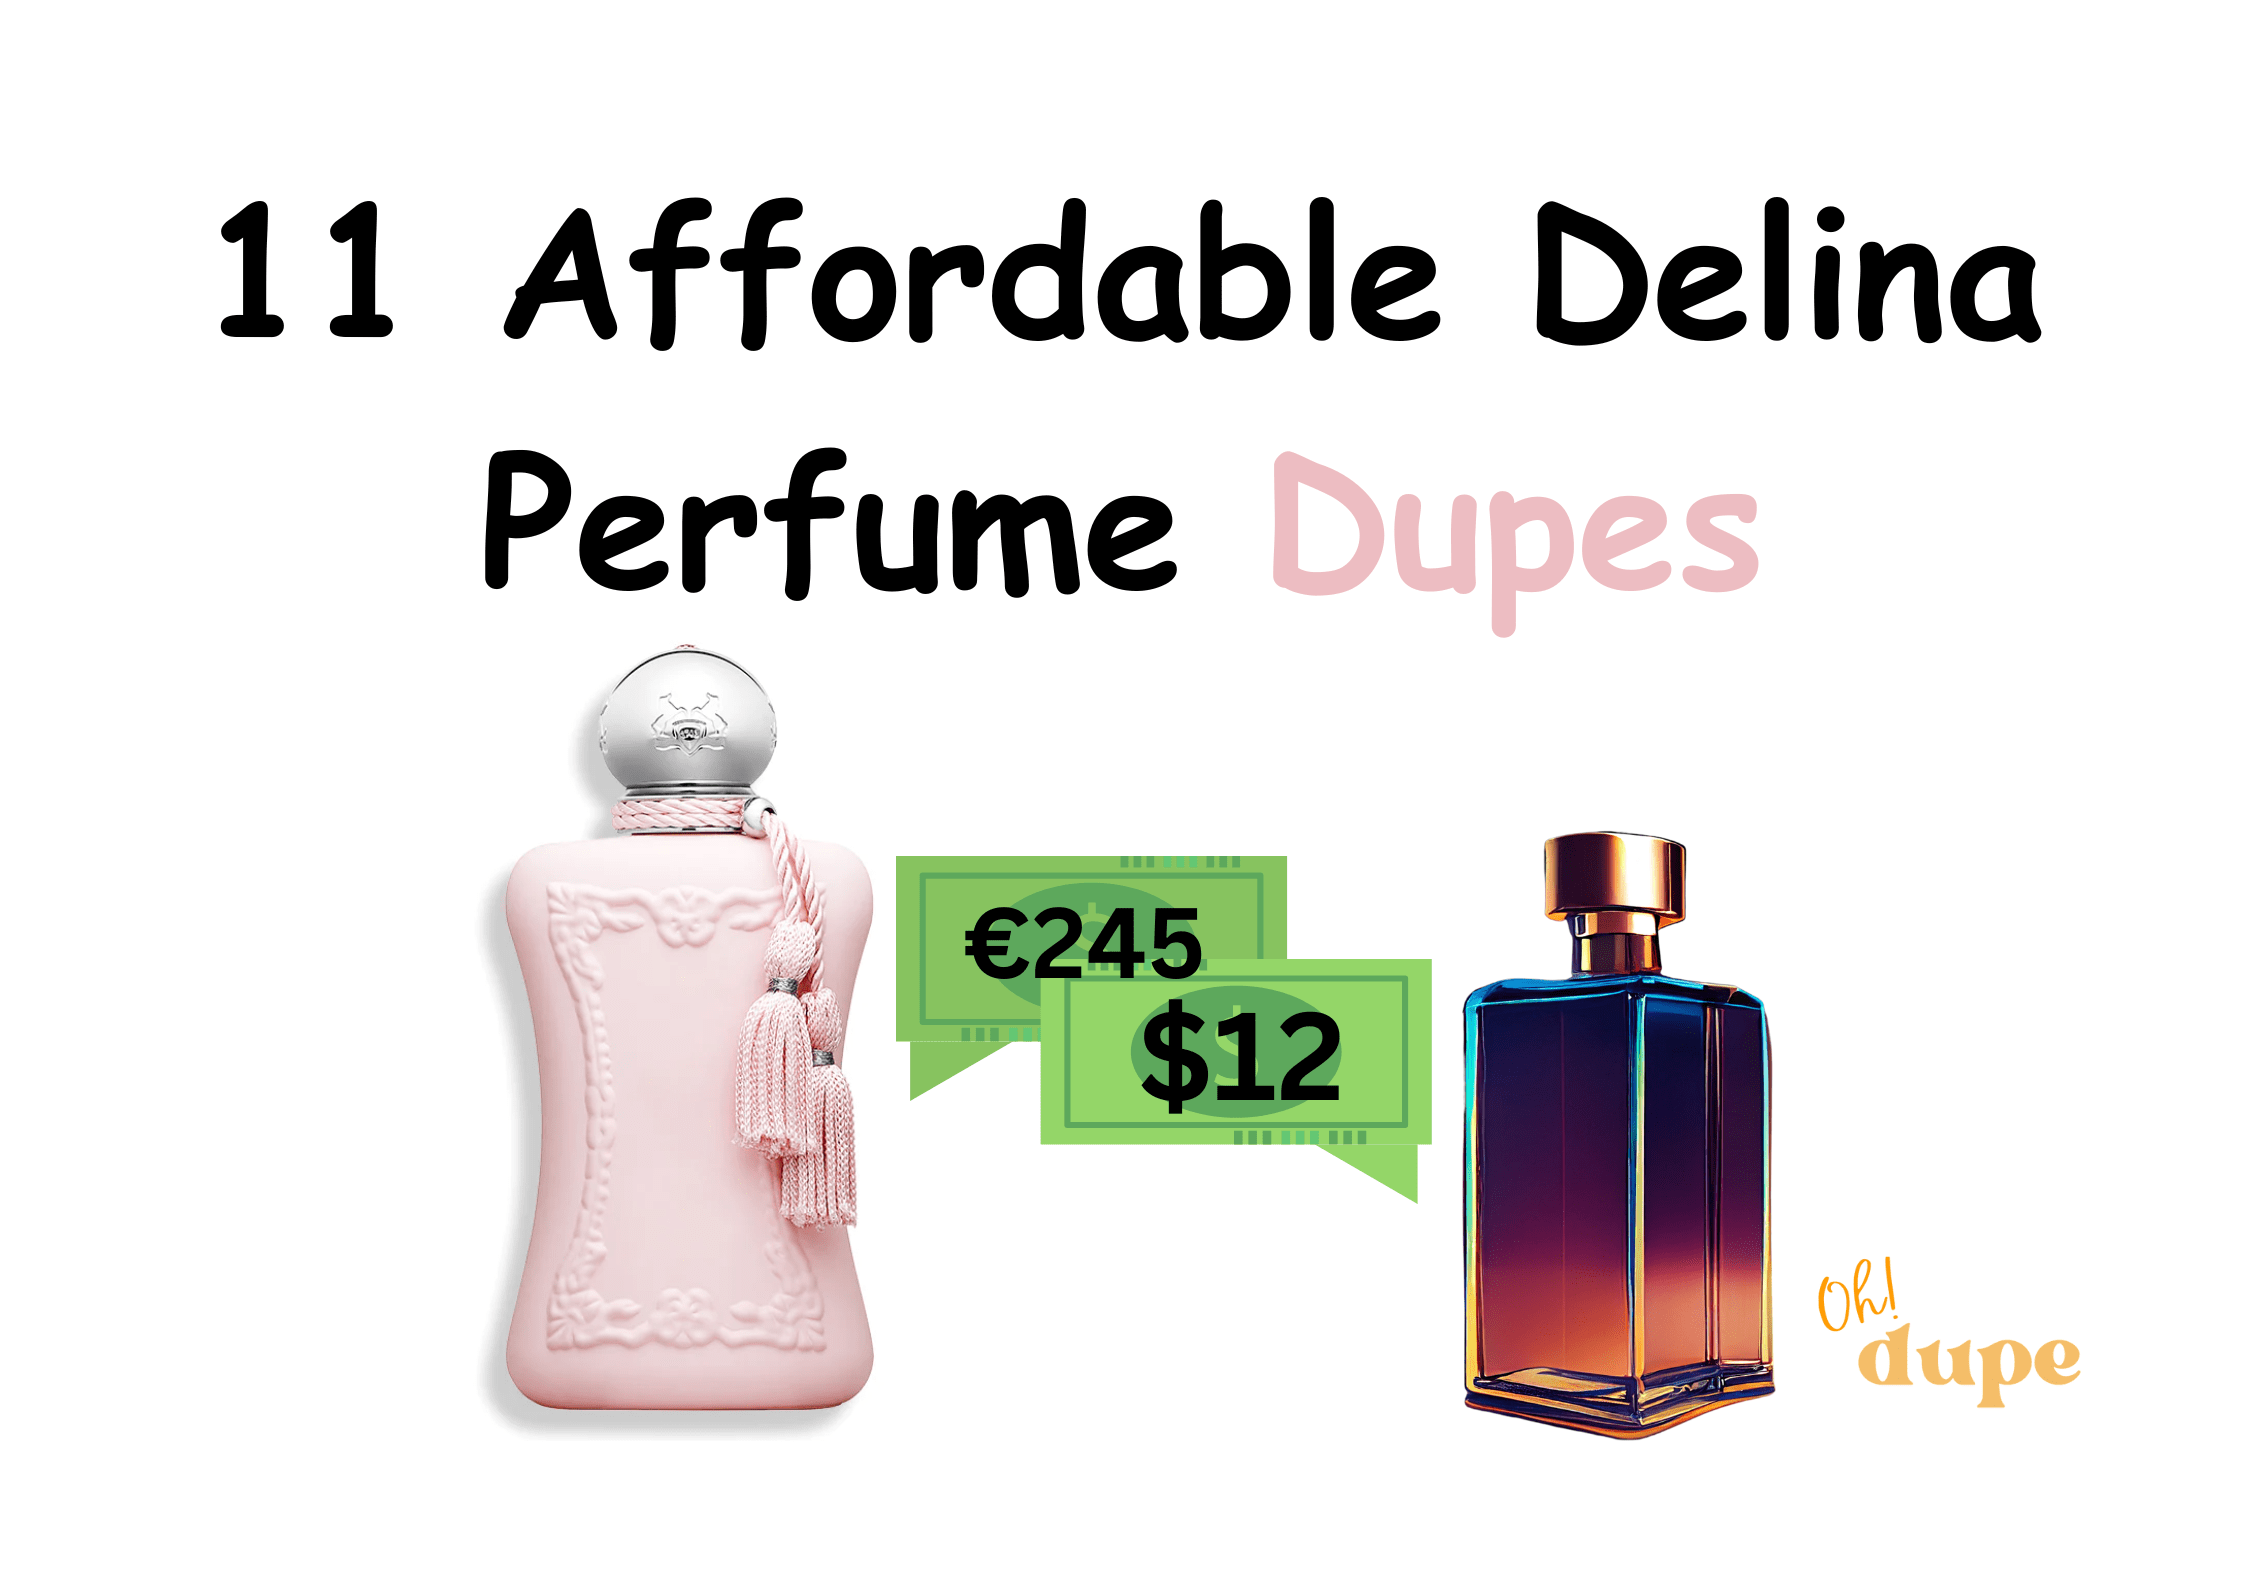 Delina Perfume Dupe